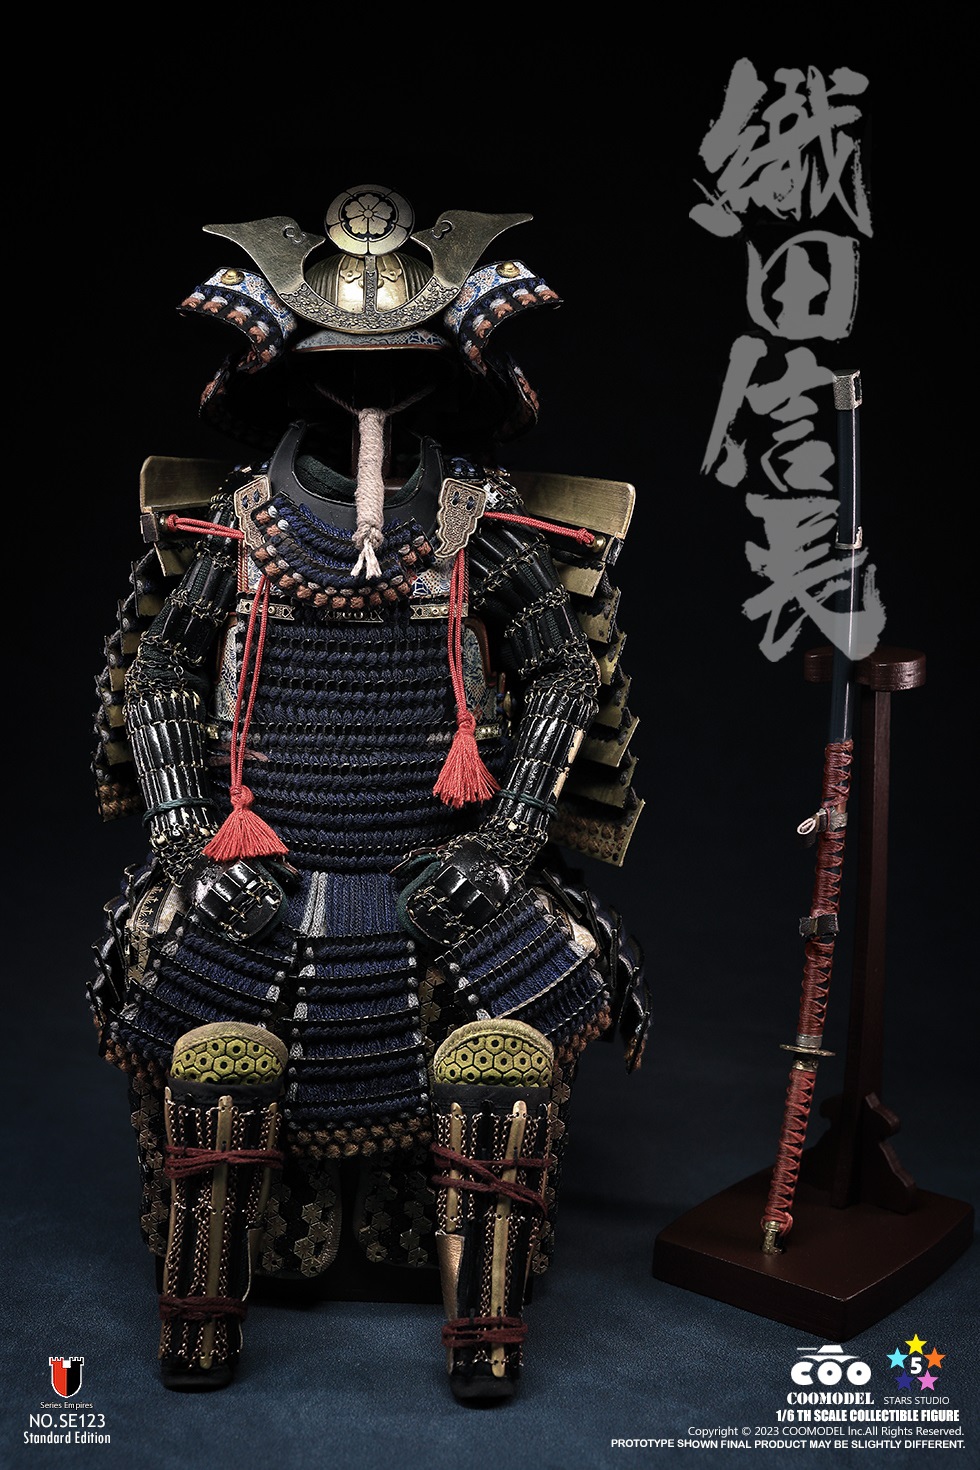 newproduct - NEW PRODUCT: COOMODEL: 1/6 Empire Series - Oda Nobunaga Samurai Edition/Hunting Edition/Pure Copper Standard Edition/Pure Copper Limited Collection Edition #SE124 23050810